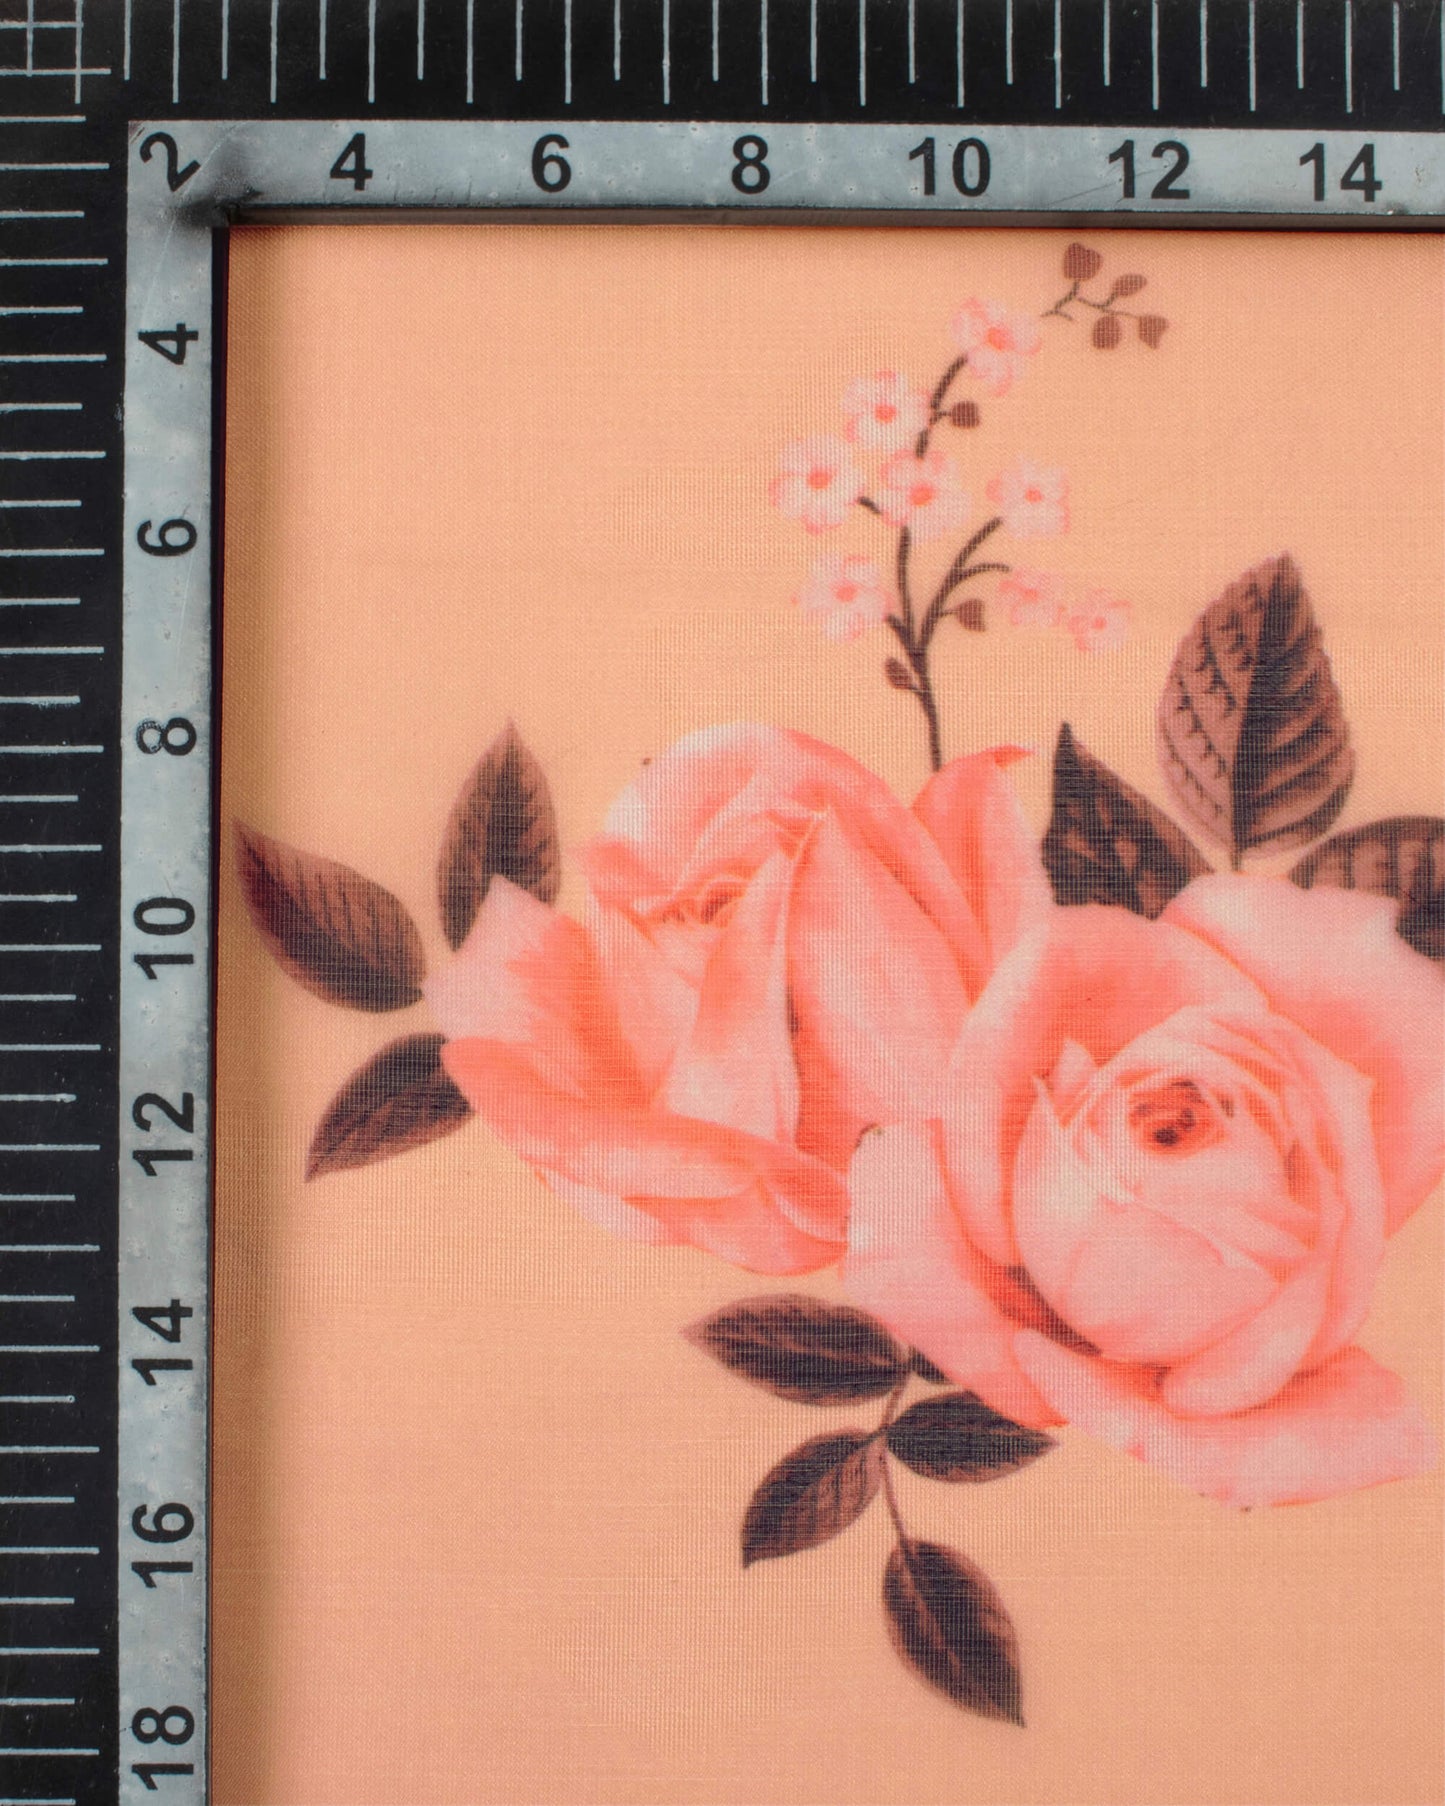 Salmon Orange And Pink Floral Pattern Digital Print Organza Dupatta With Tassels